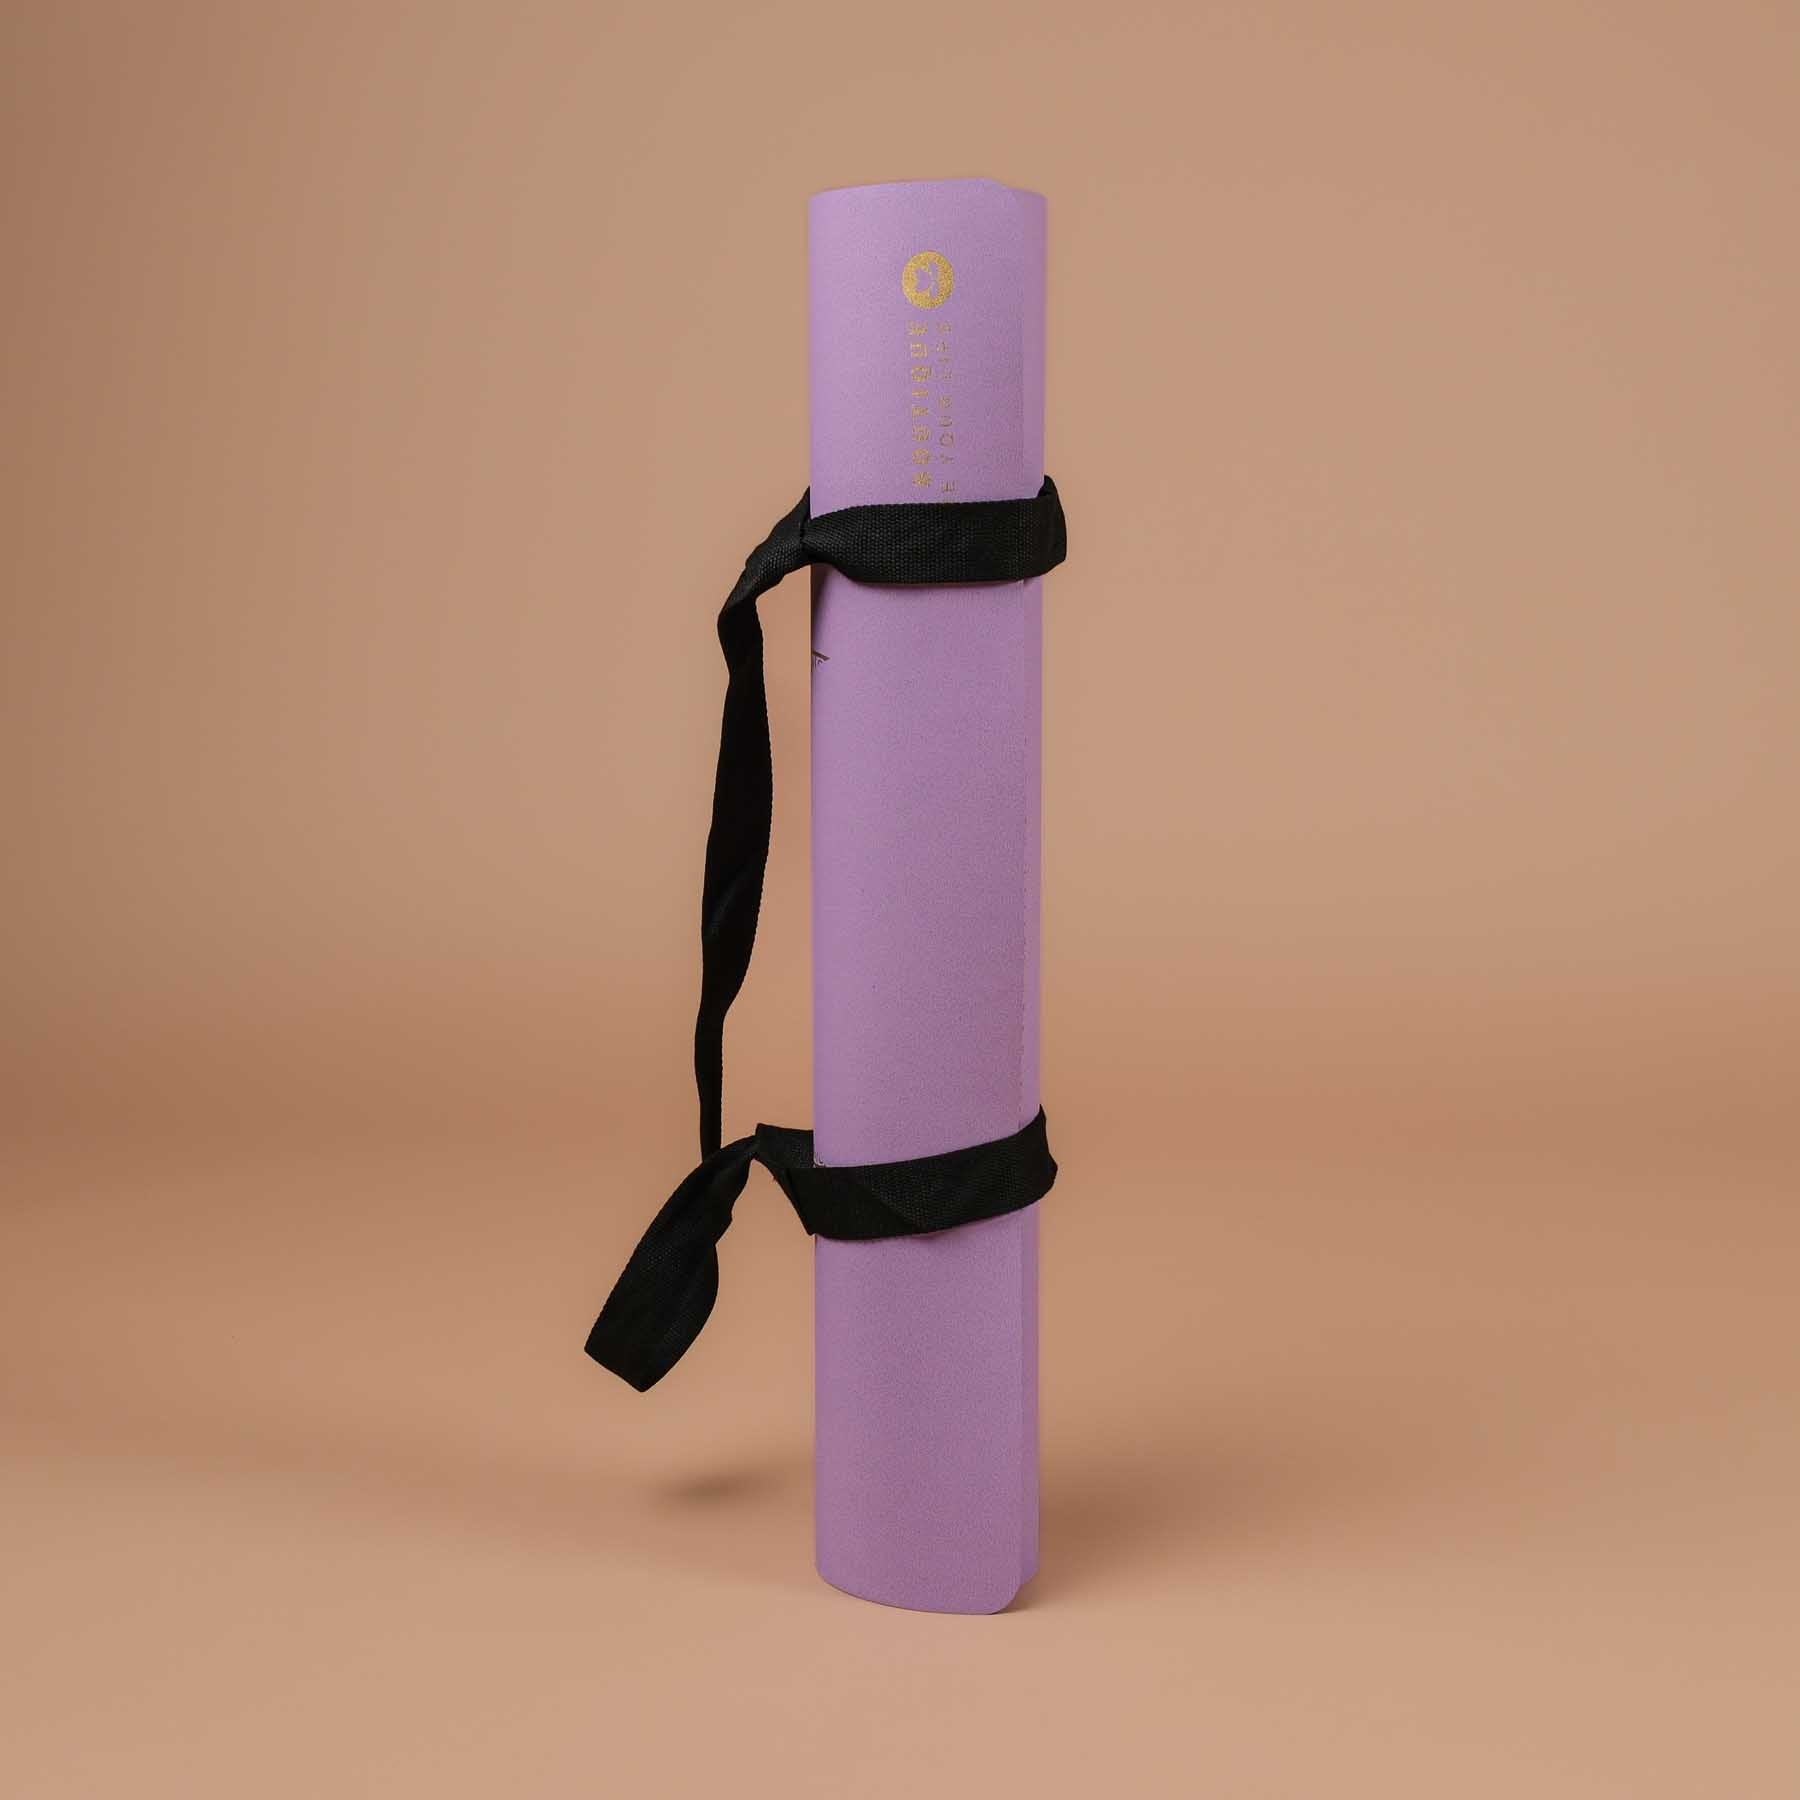 Tapis de yoga SuperGrip 2.0 Mandala Moon super antidérapant en caoutchouc naturel violet